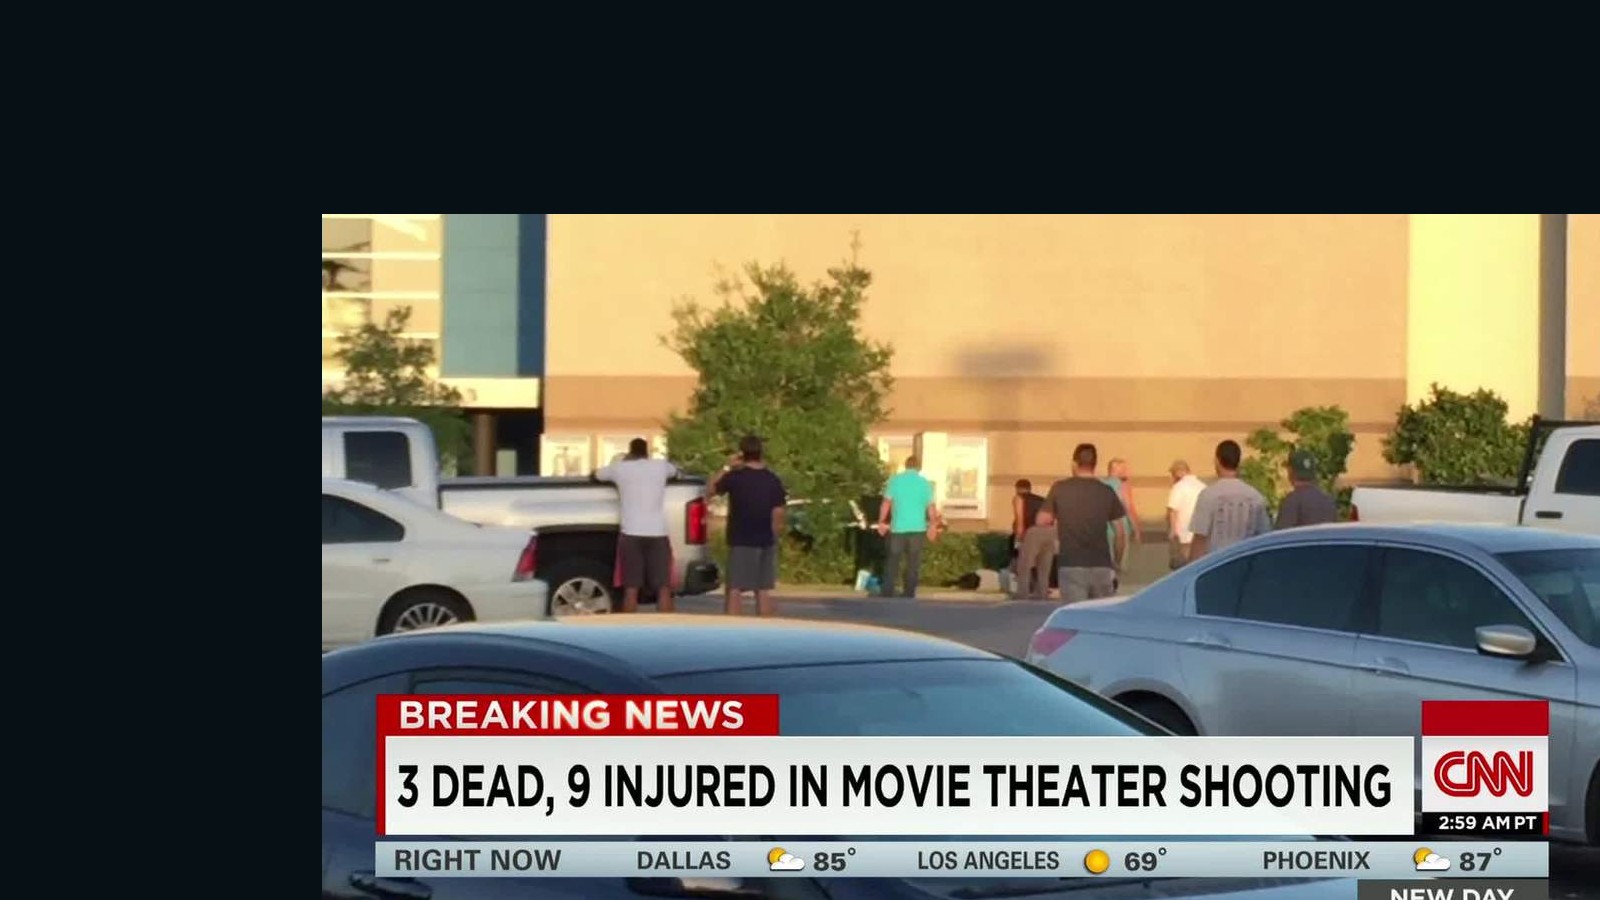 joplin movie theater shooting